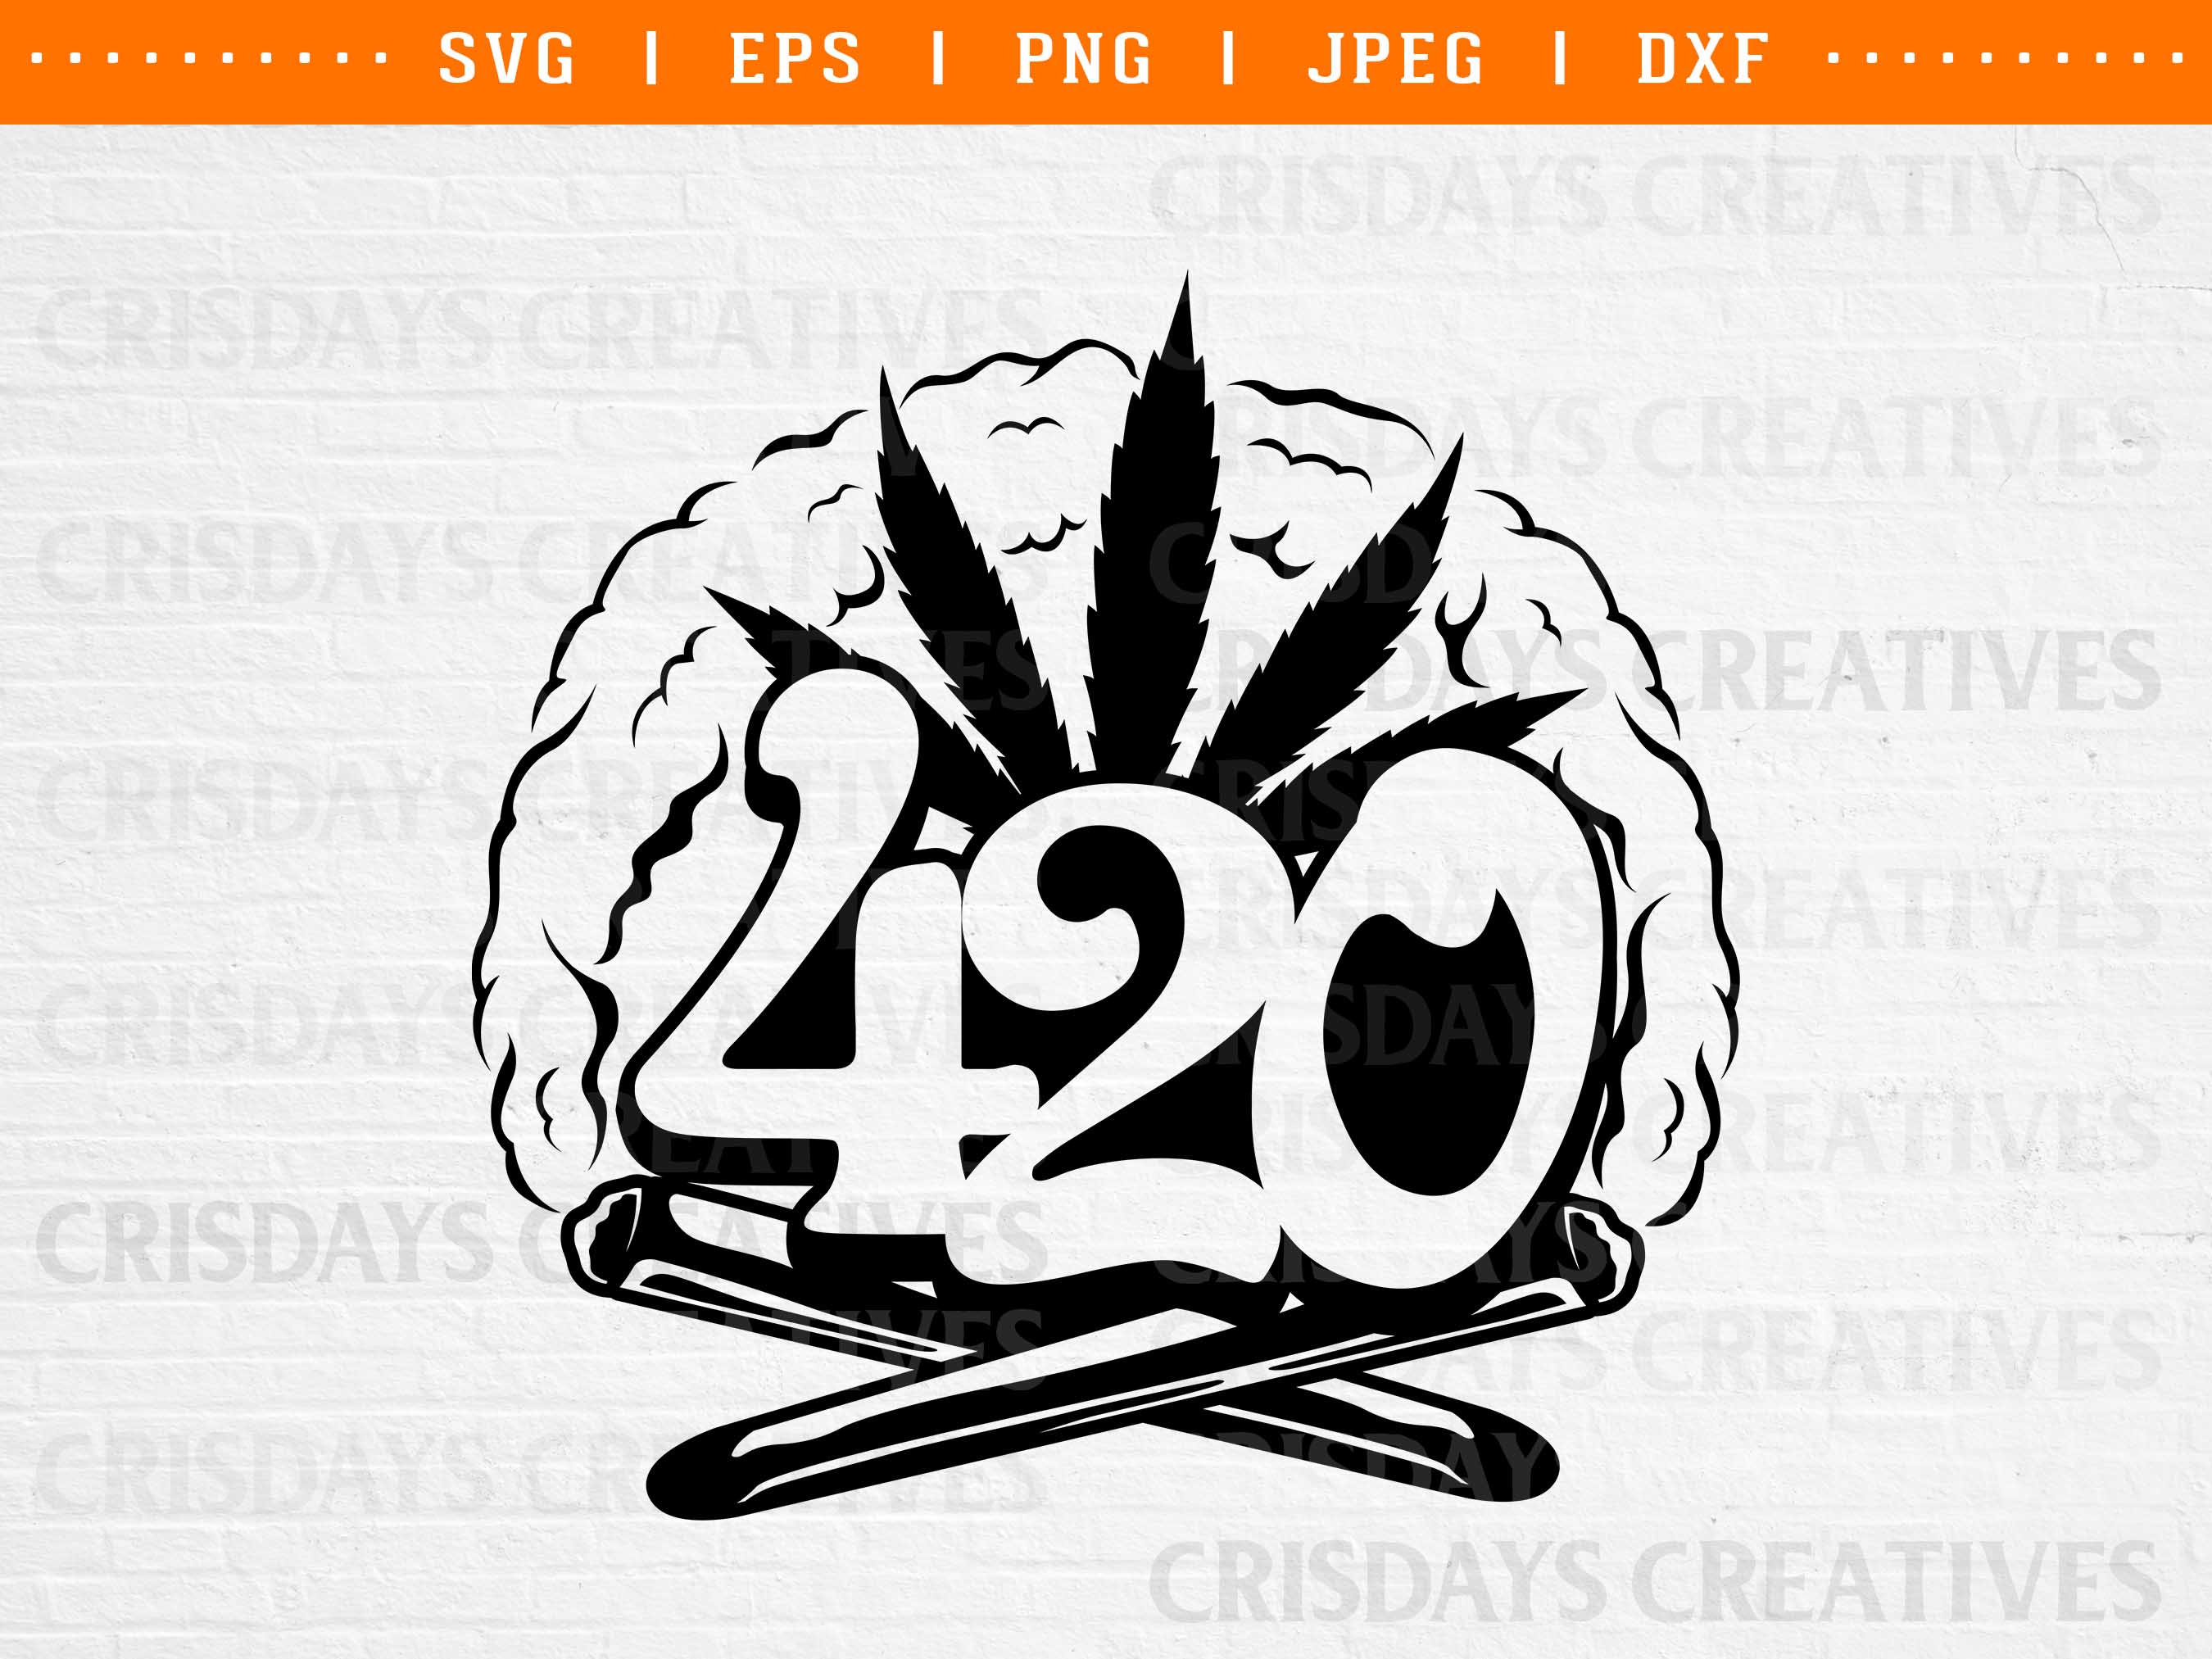 Happy 420 Lettering Typography Design Cannabis Stock Vector